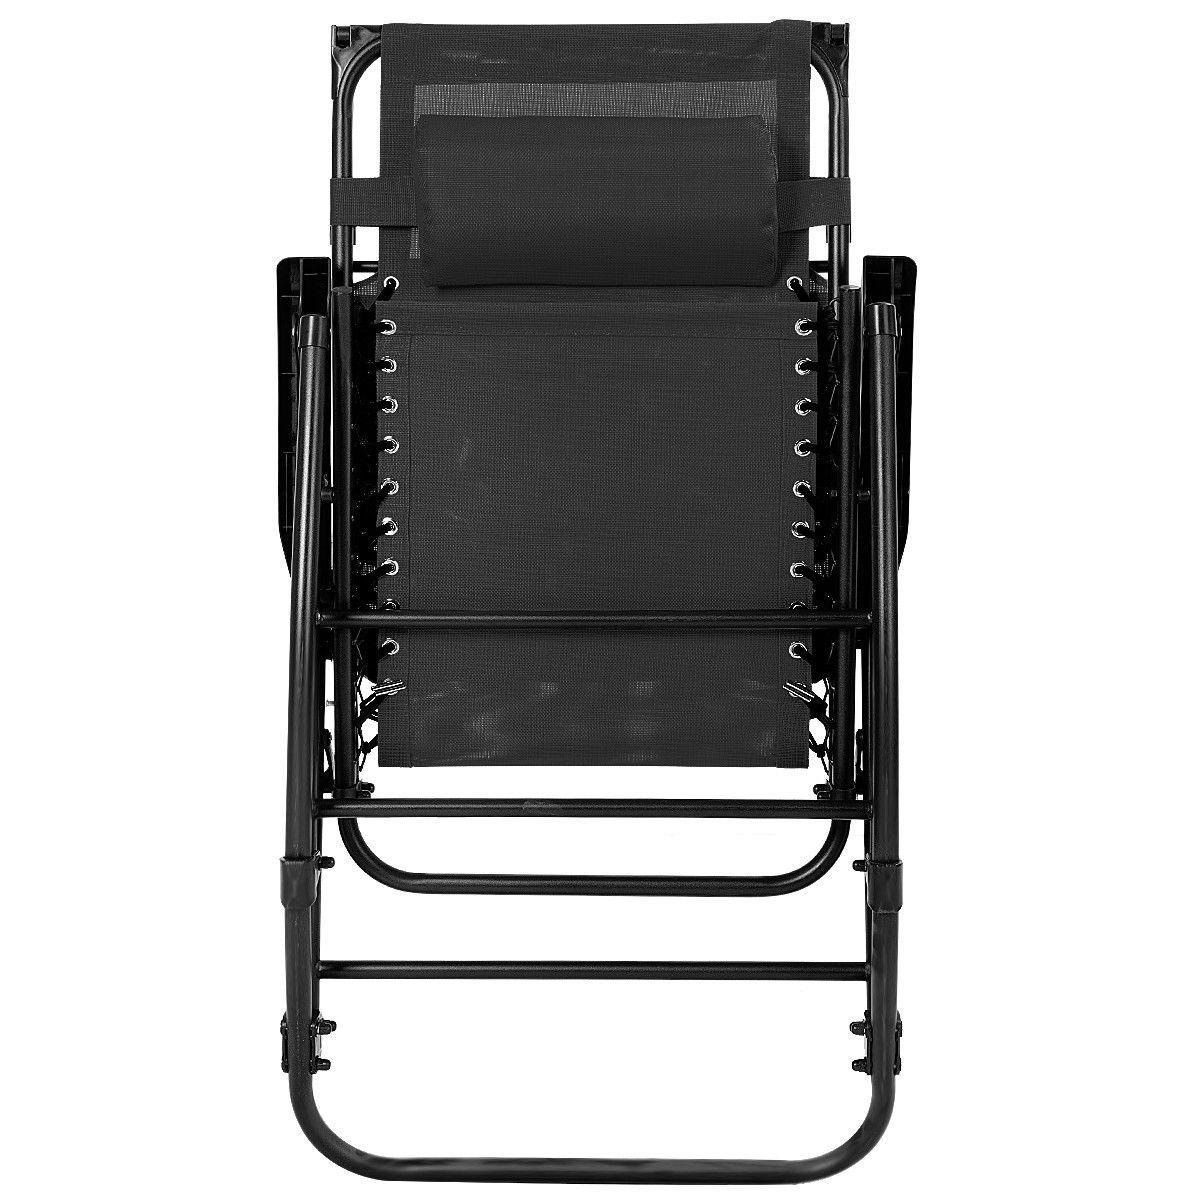 Folding Rocking Chair Rocker Porch Zero Gravity Furniture Sunshade Canopy Black (FW2)(1U67)(F67)